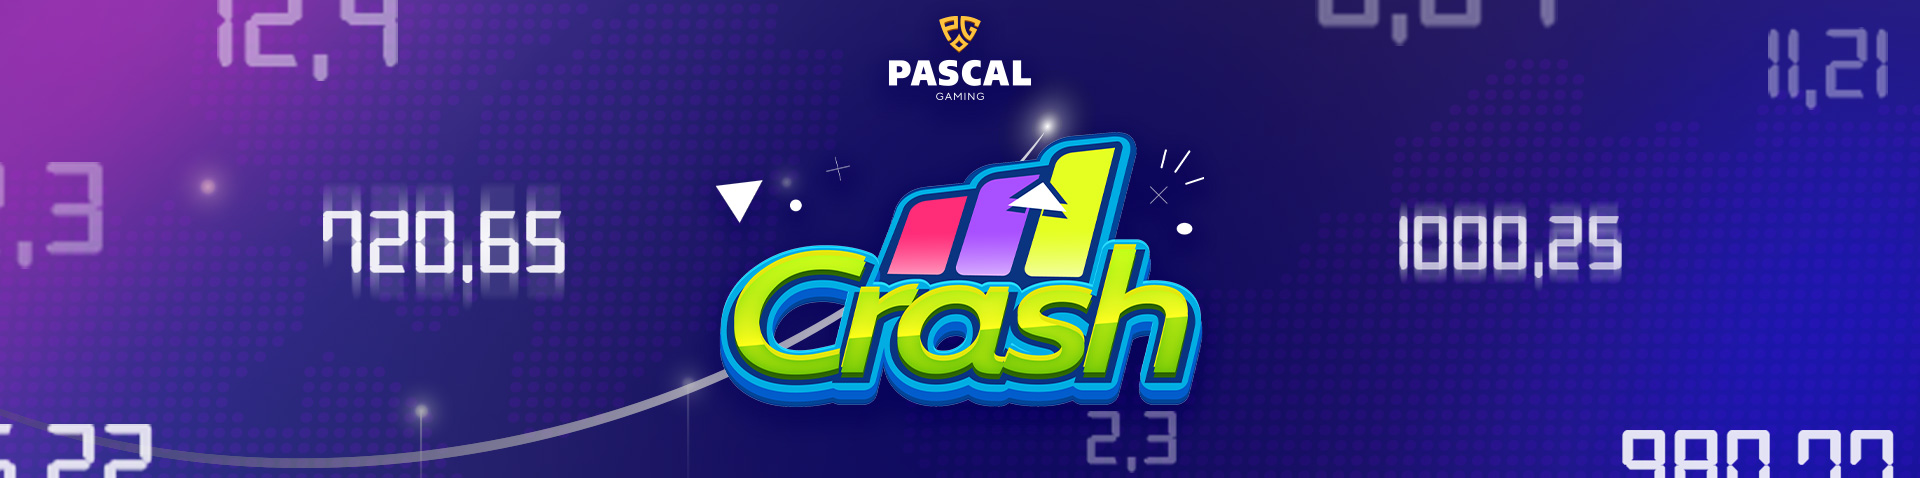 Crash  Pascal Gaming